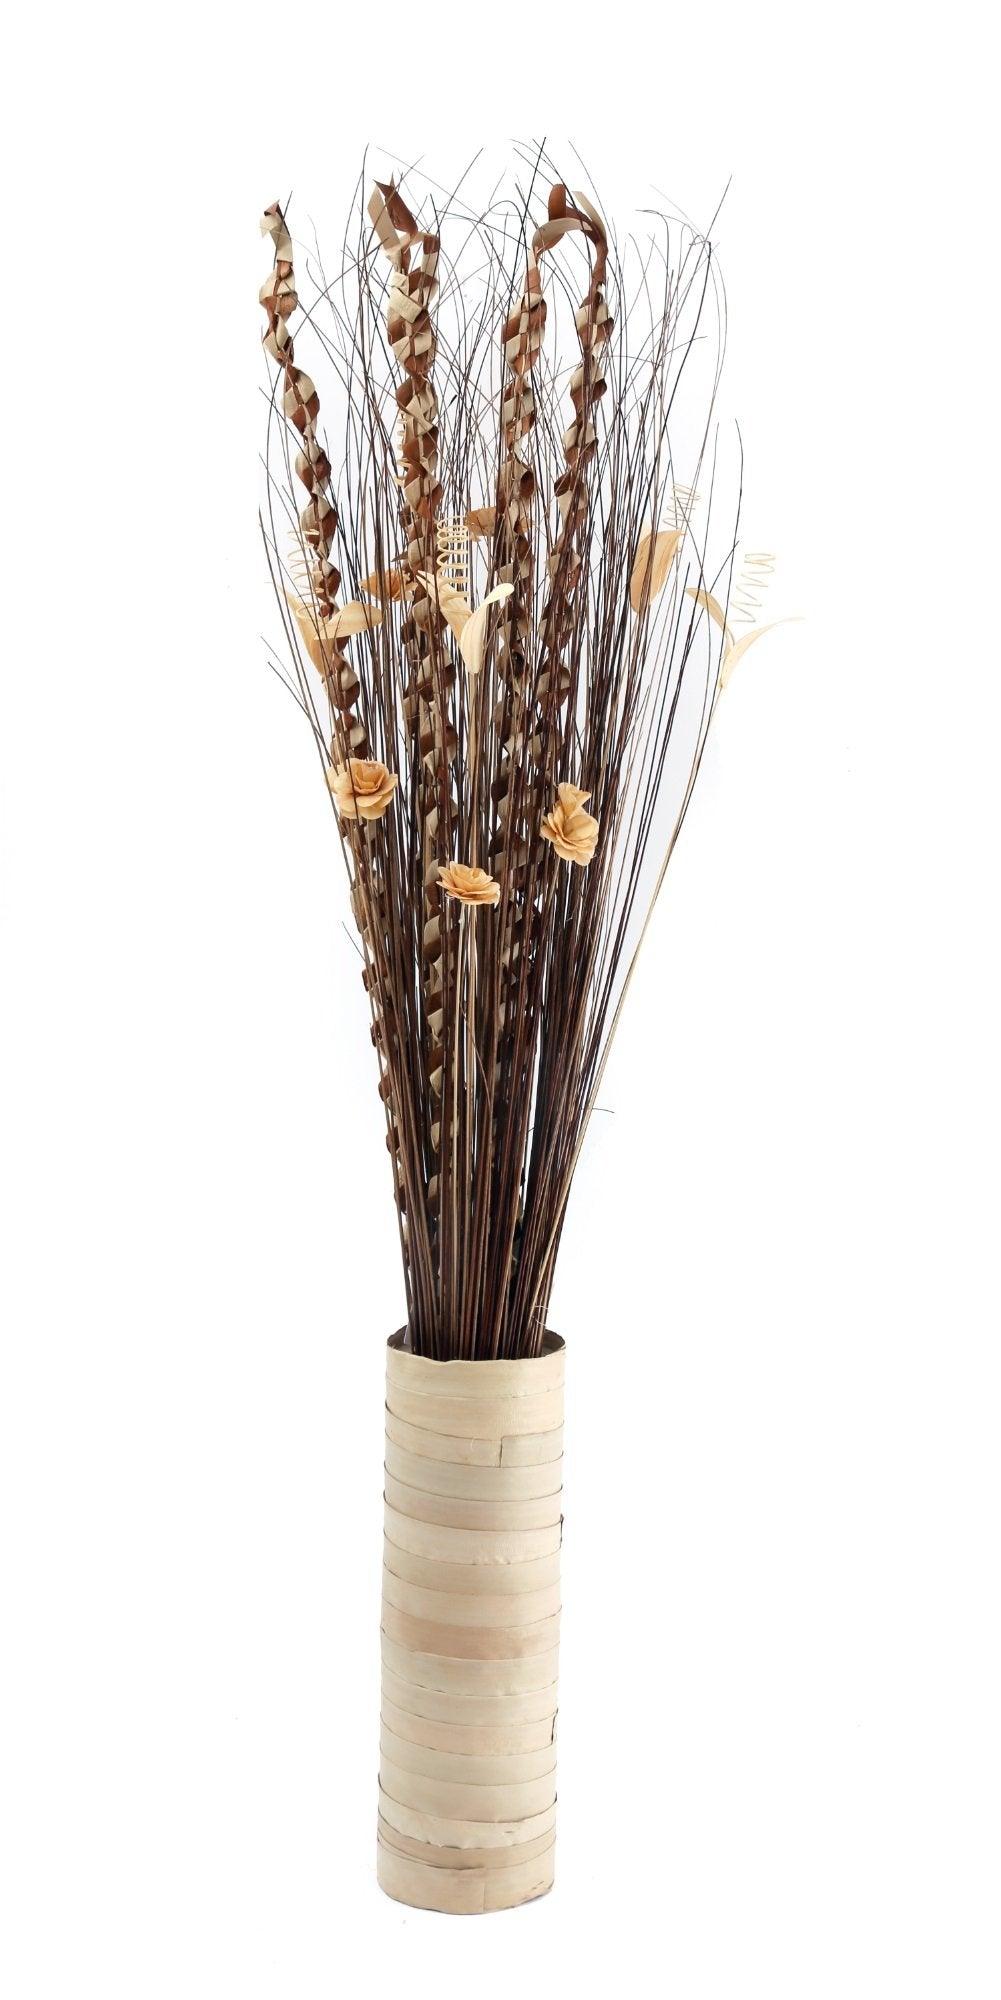 Plaited Dried Palm Leaf Arrangement In A Vase 150cm - £59.99 - Flower Sprays 